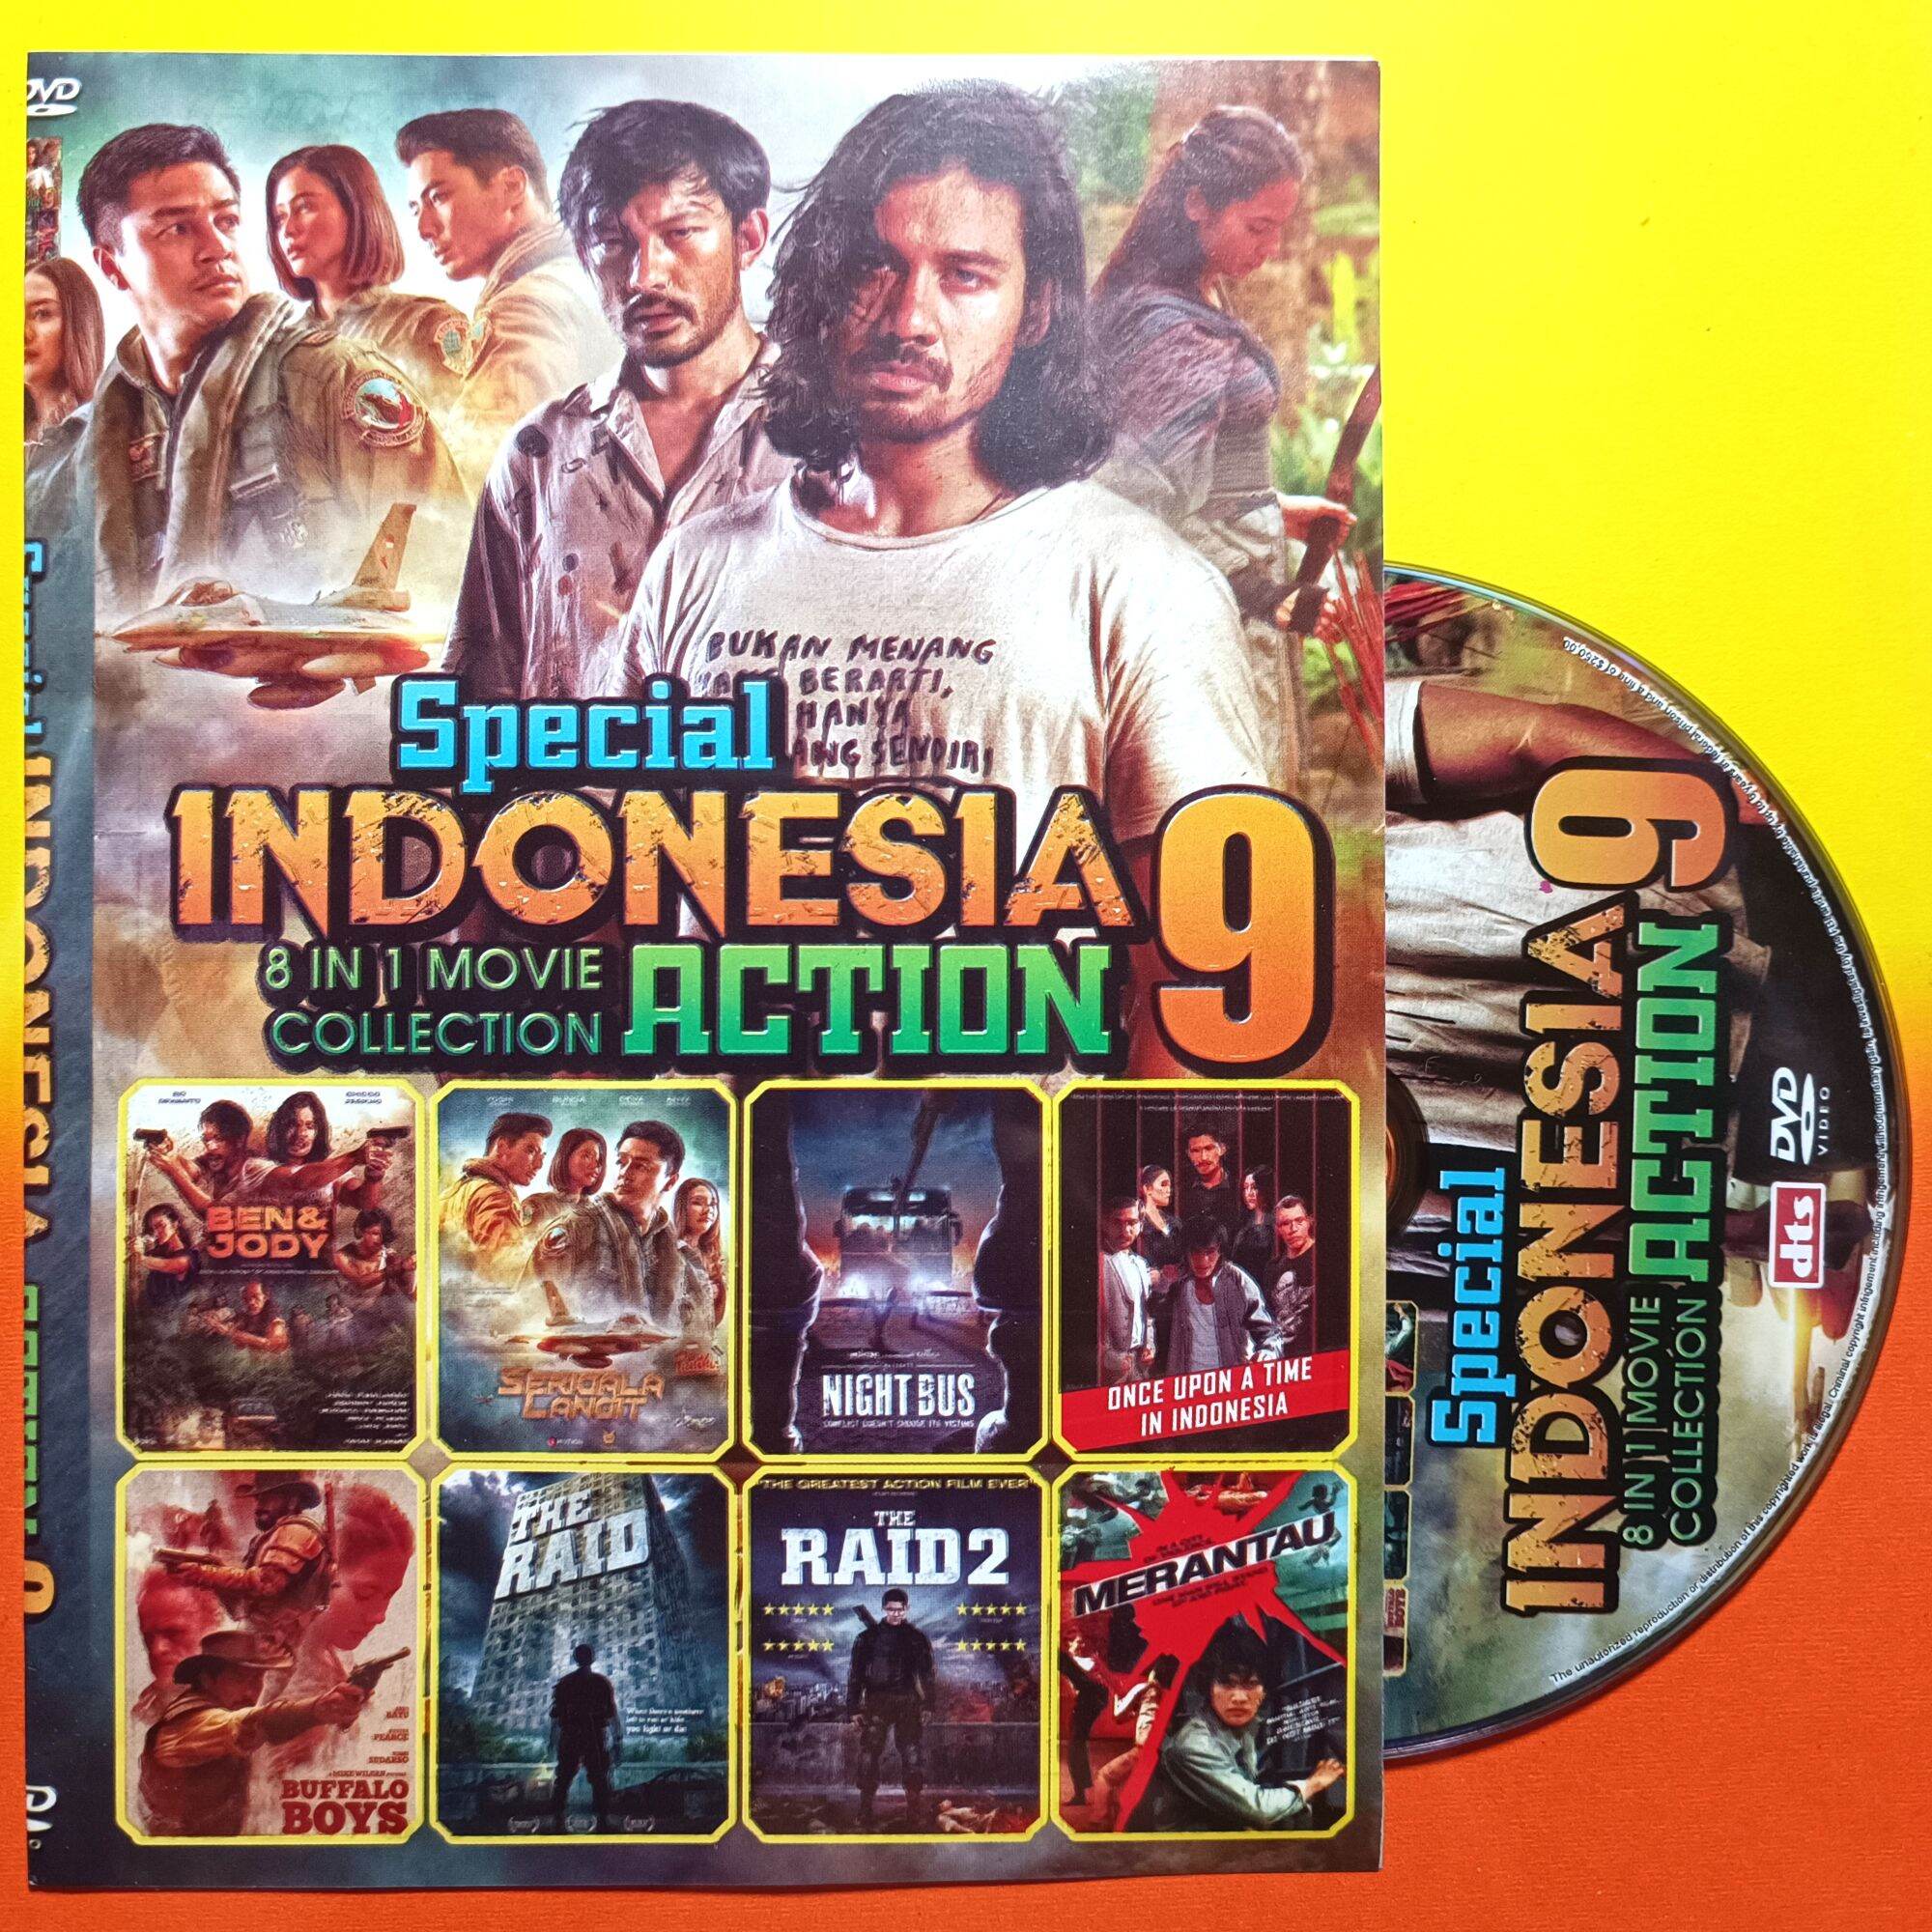 Kaset Film Indonesia Action Koleksi Volume 9 Pilihan Terpopuler Lazada Indonesia 